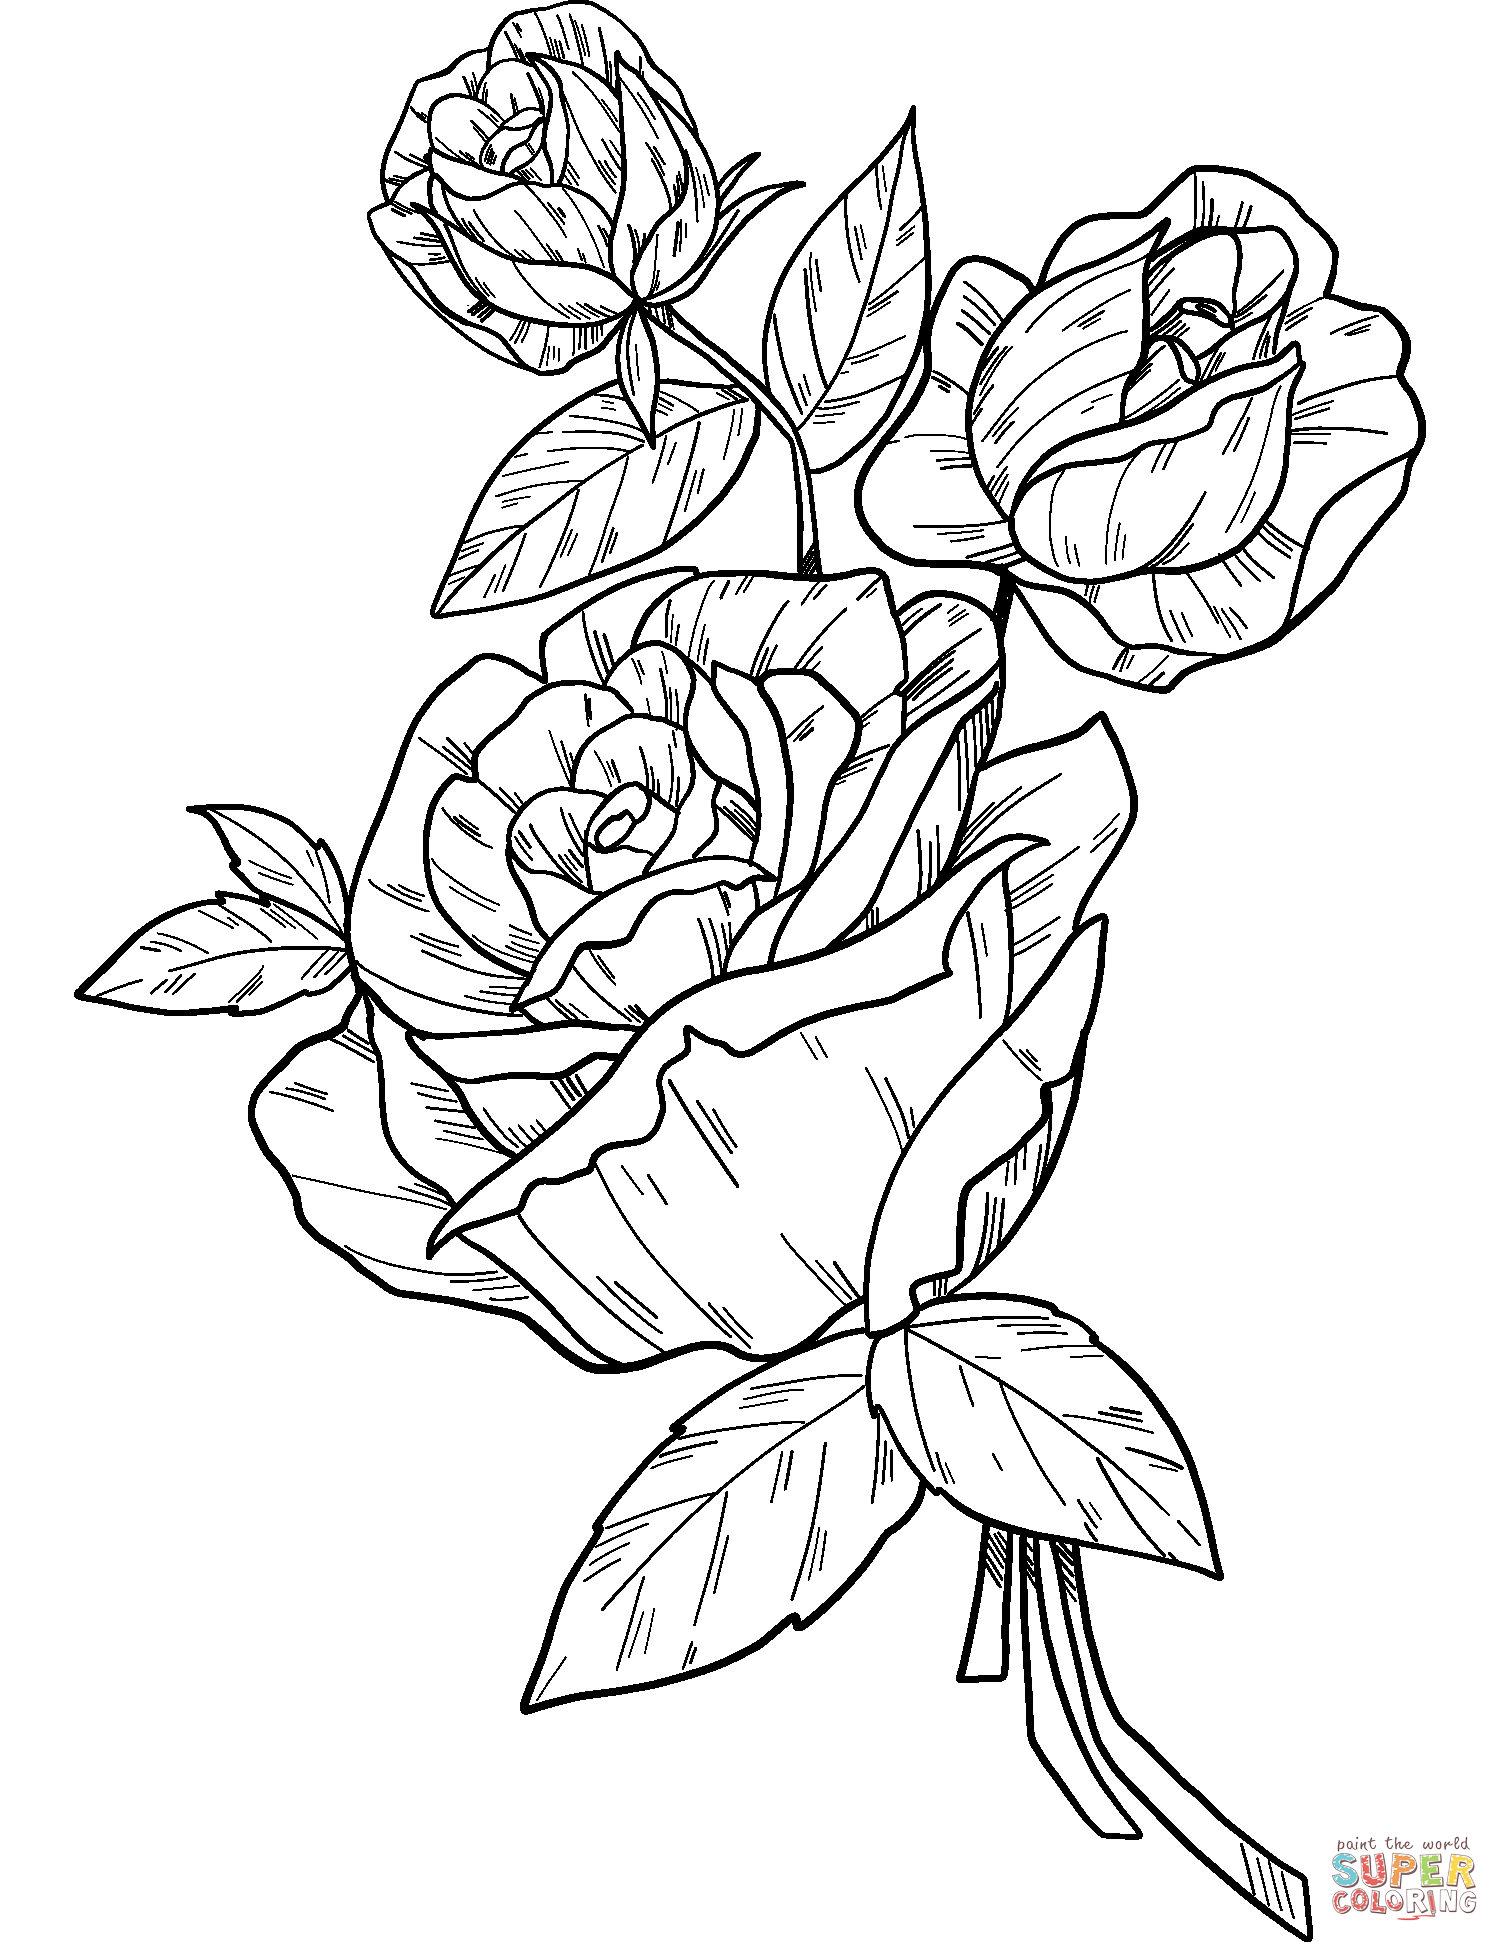 Rose dalle rose